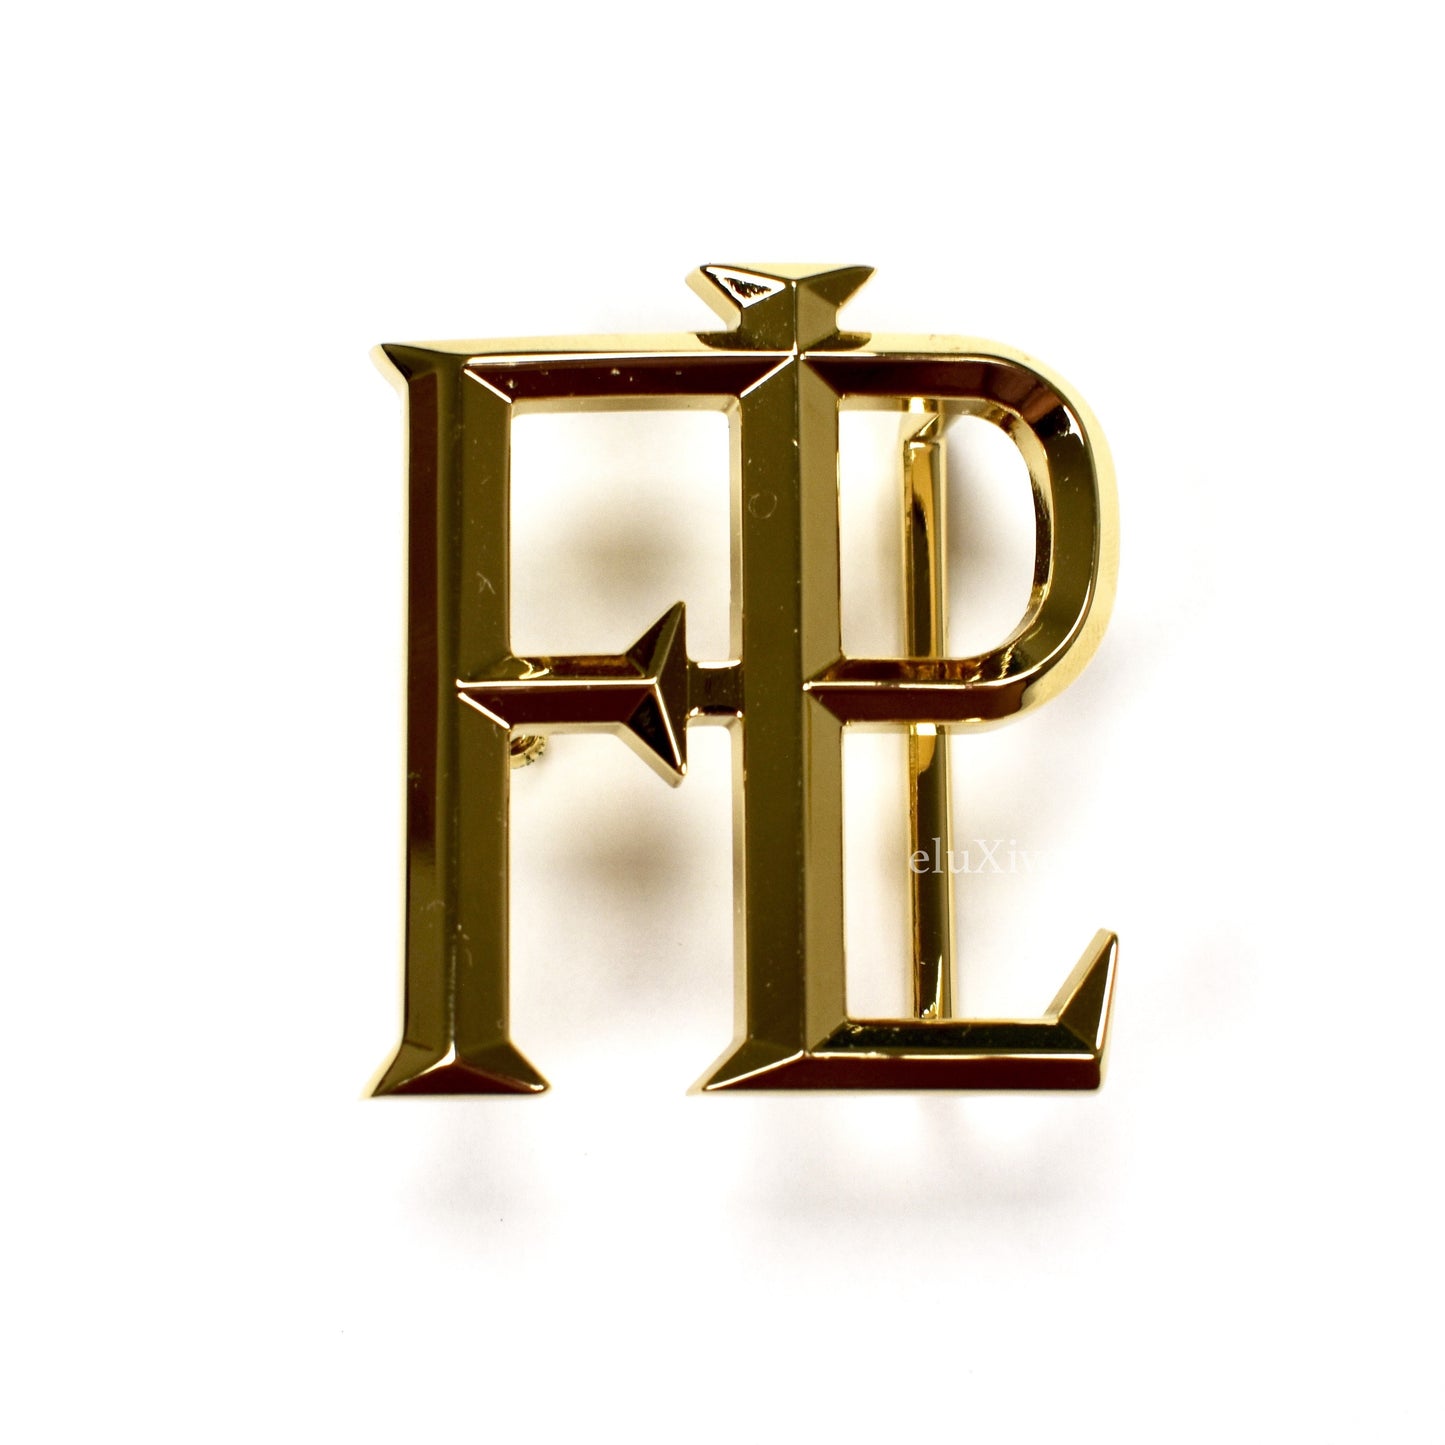 Faure Le Page - Gold FLP Logo Reversible Belt (Green/Black)